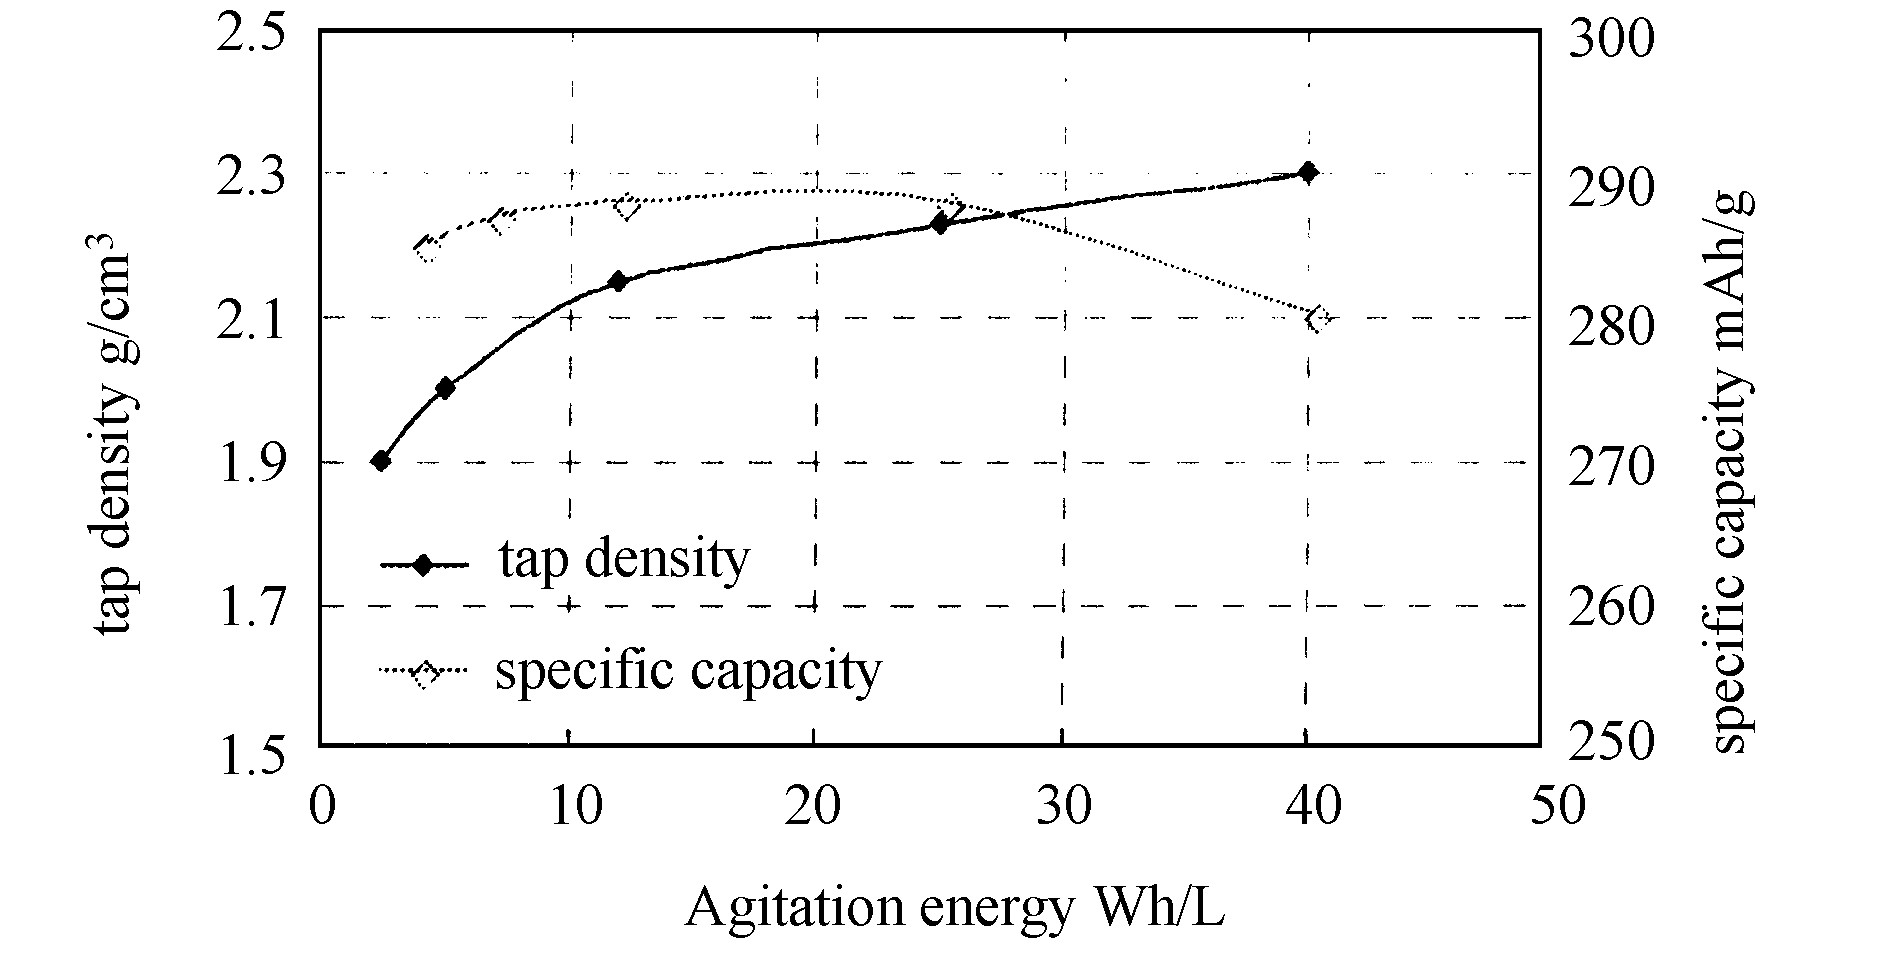 图6 反应器输入能量对比容量和振实密度的影响
Fig.6 Dependency of specific capacity & density
 on agitation power